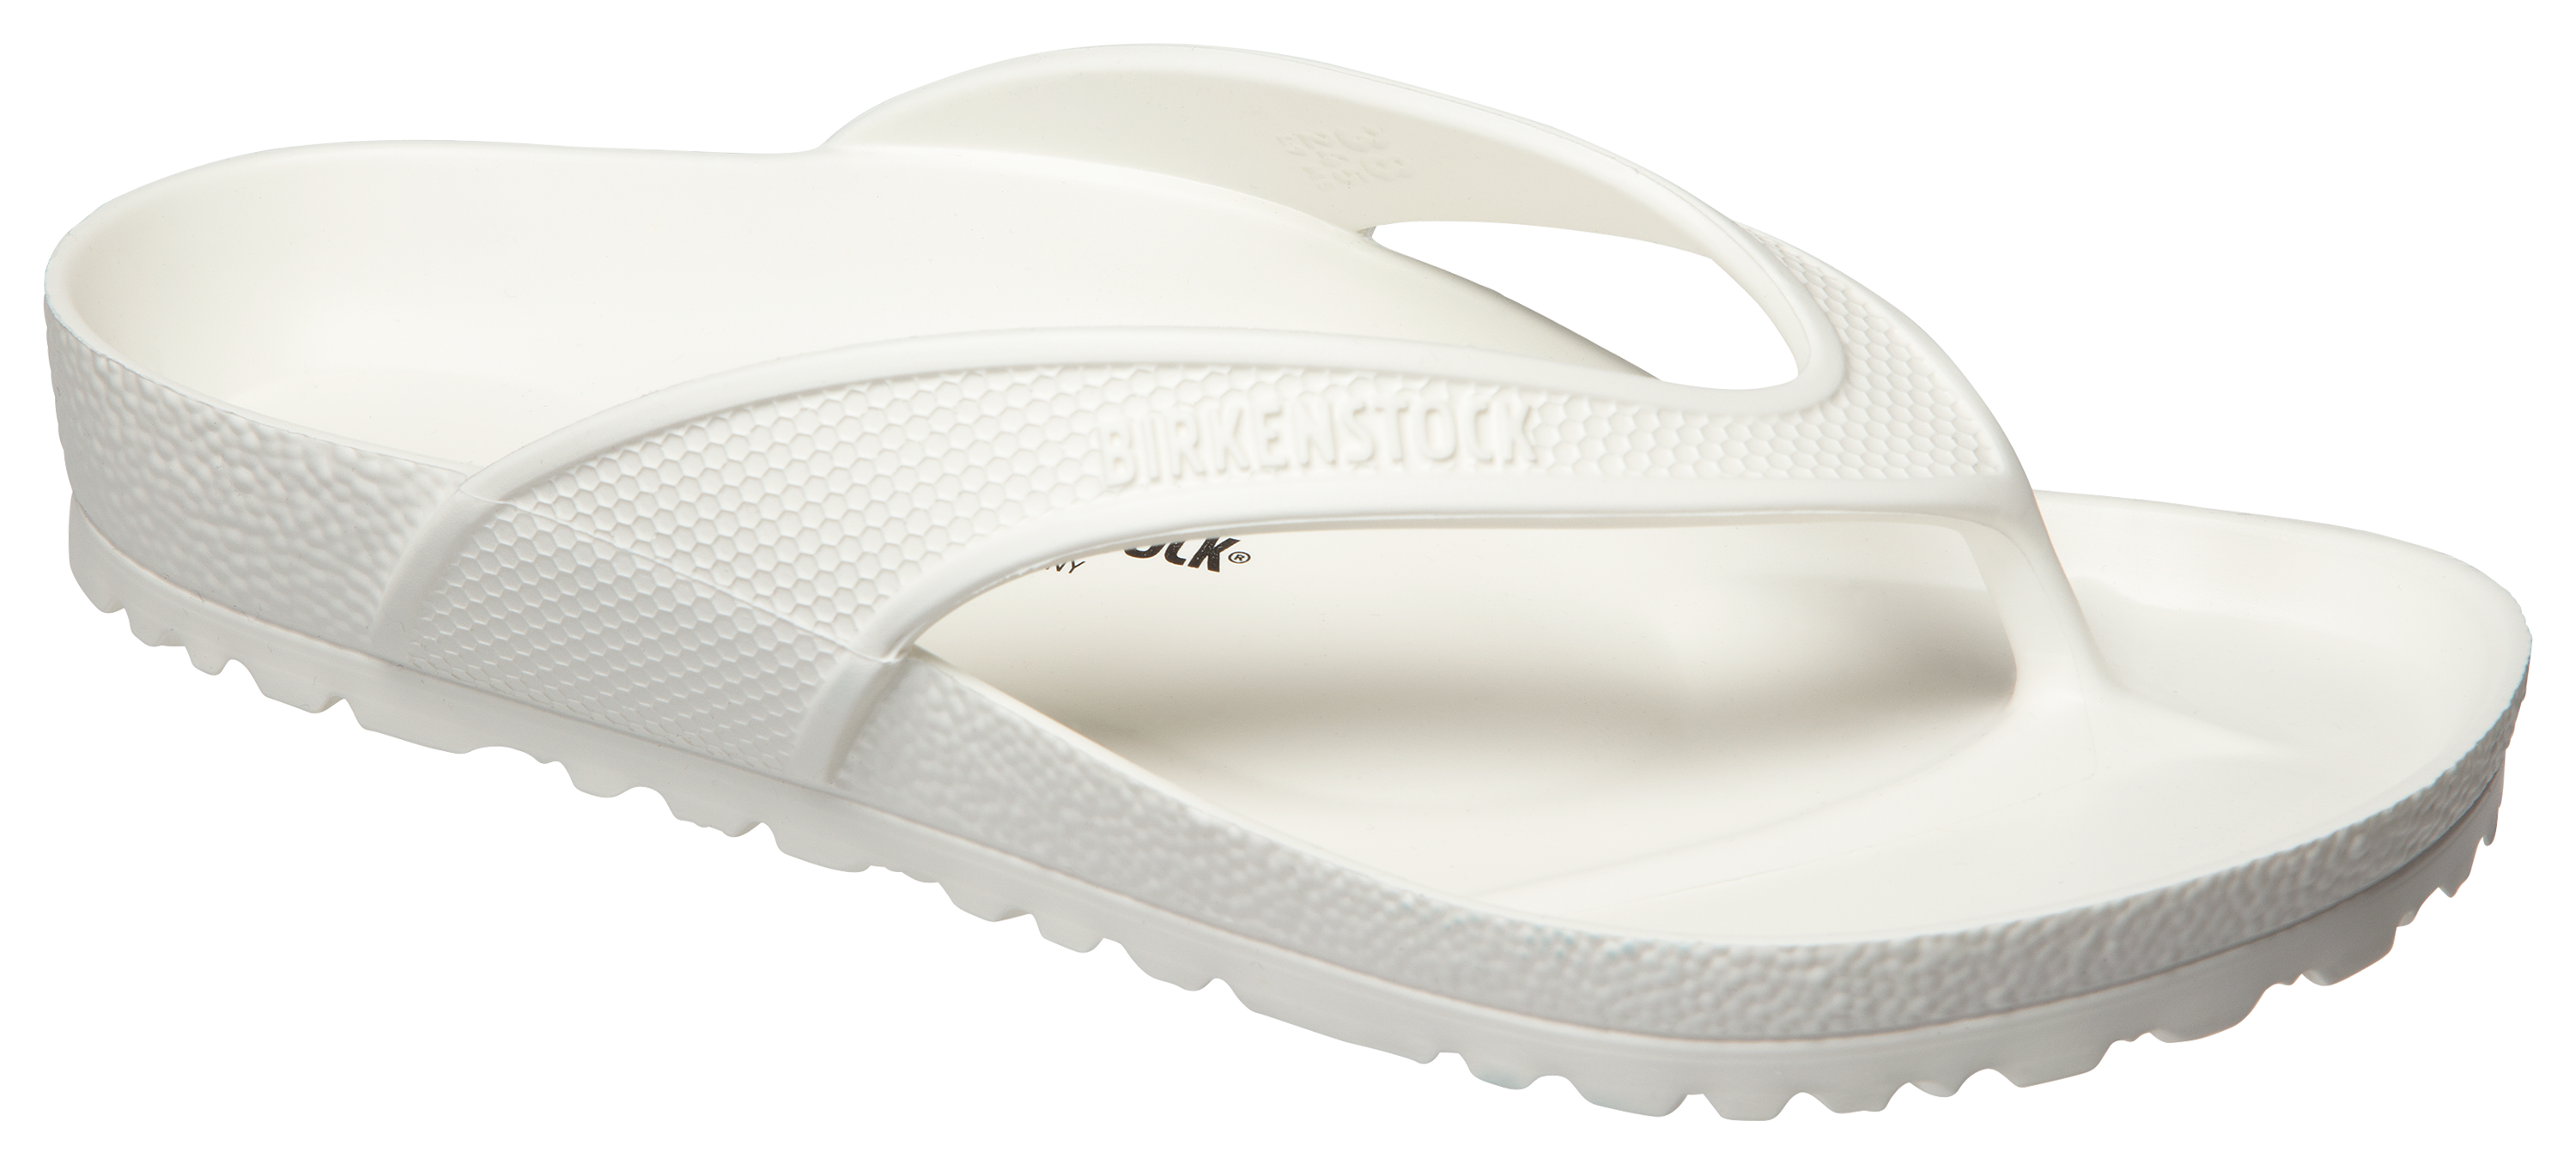 Birkenstock Honolulu EVA Thong Sandals for Ladies White 38M